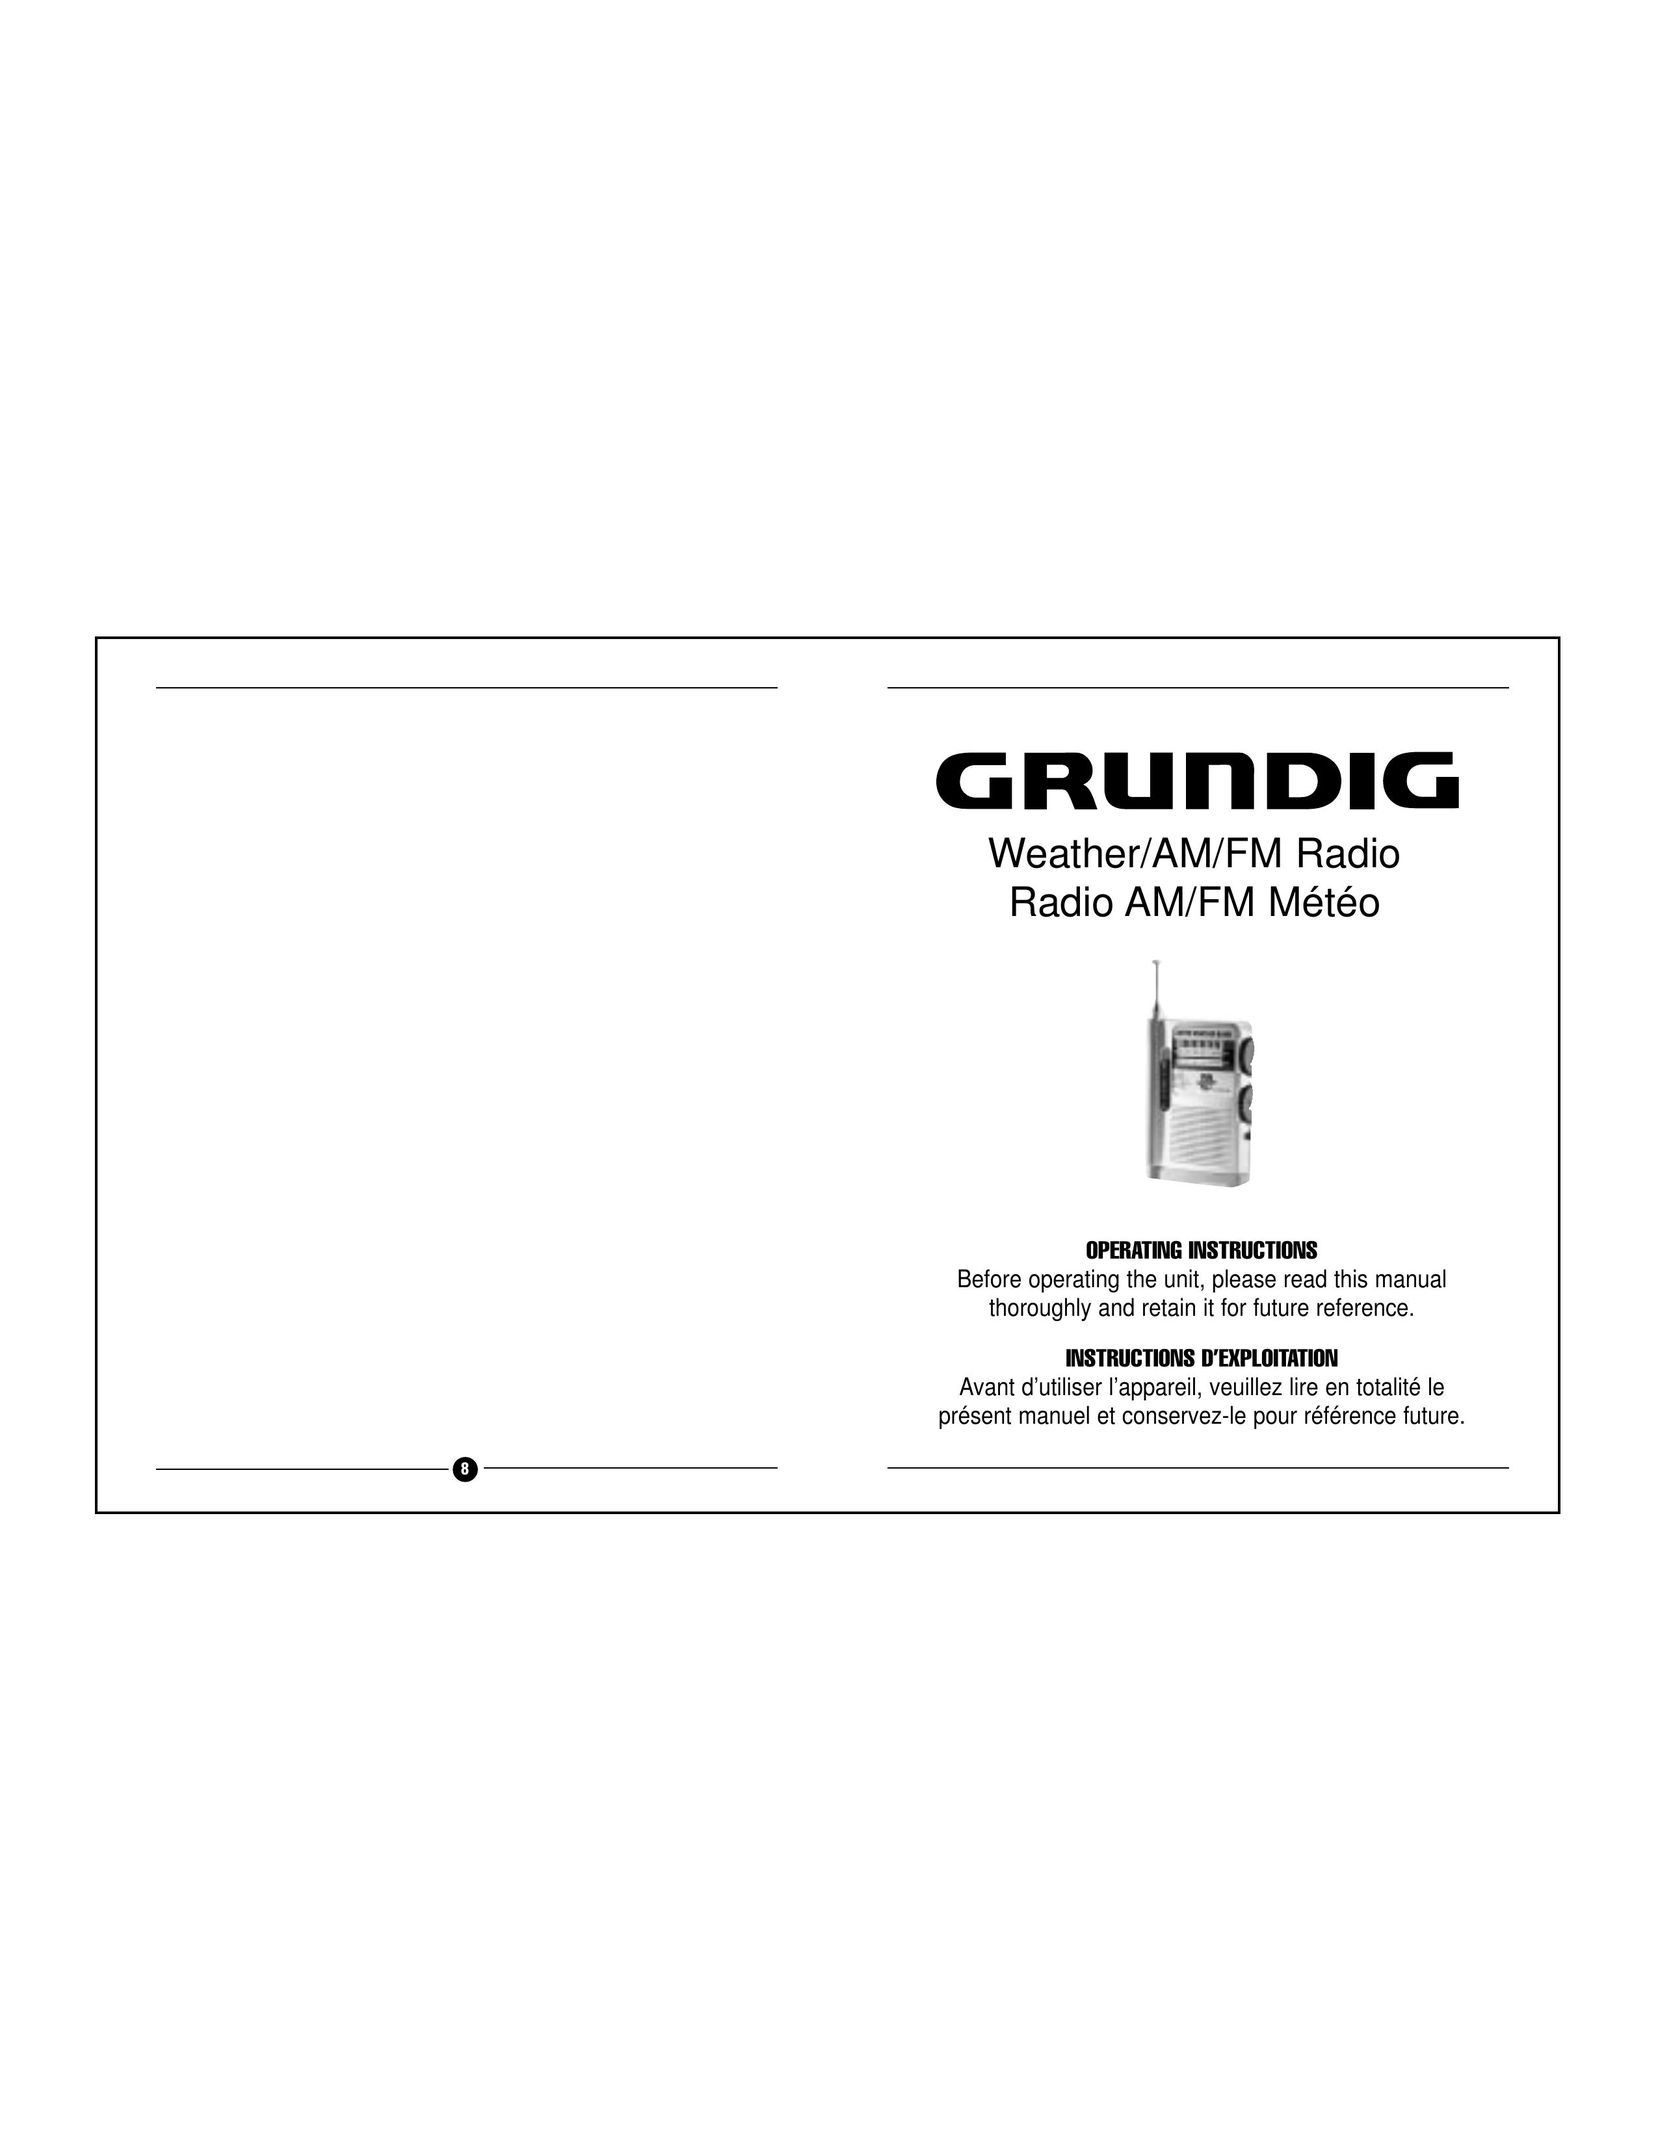 Grundig Weather/AM/FM Radio Stereo System User Manual